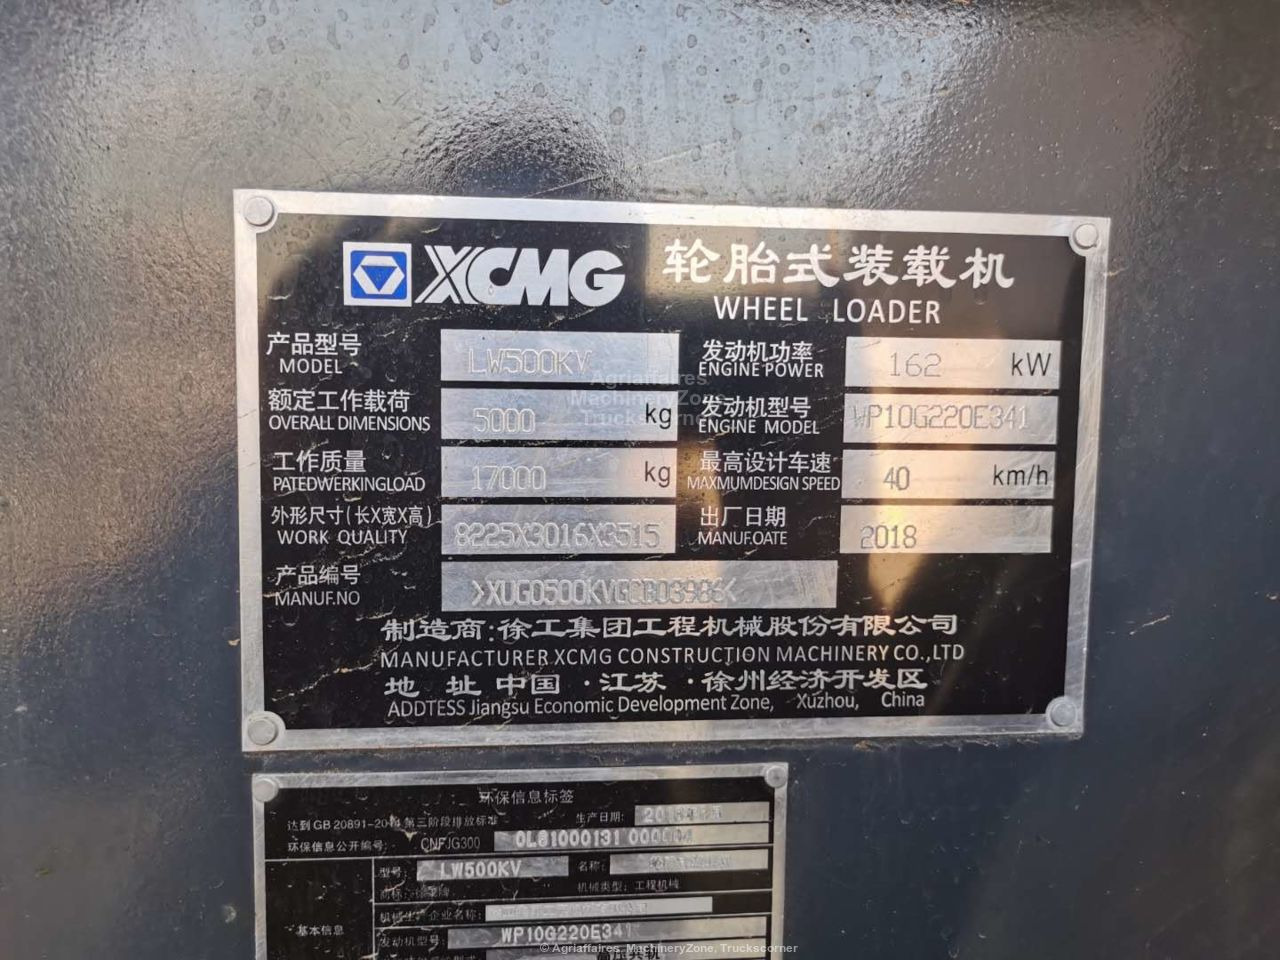 Wheel loader XCMG LW500KV